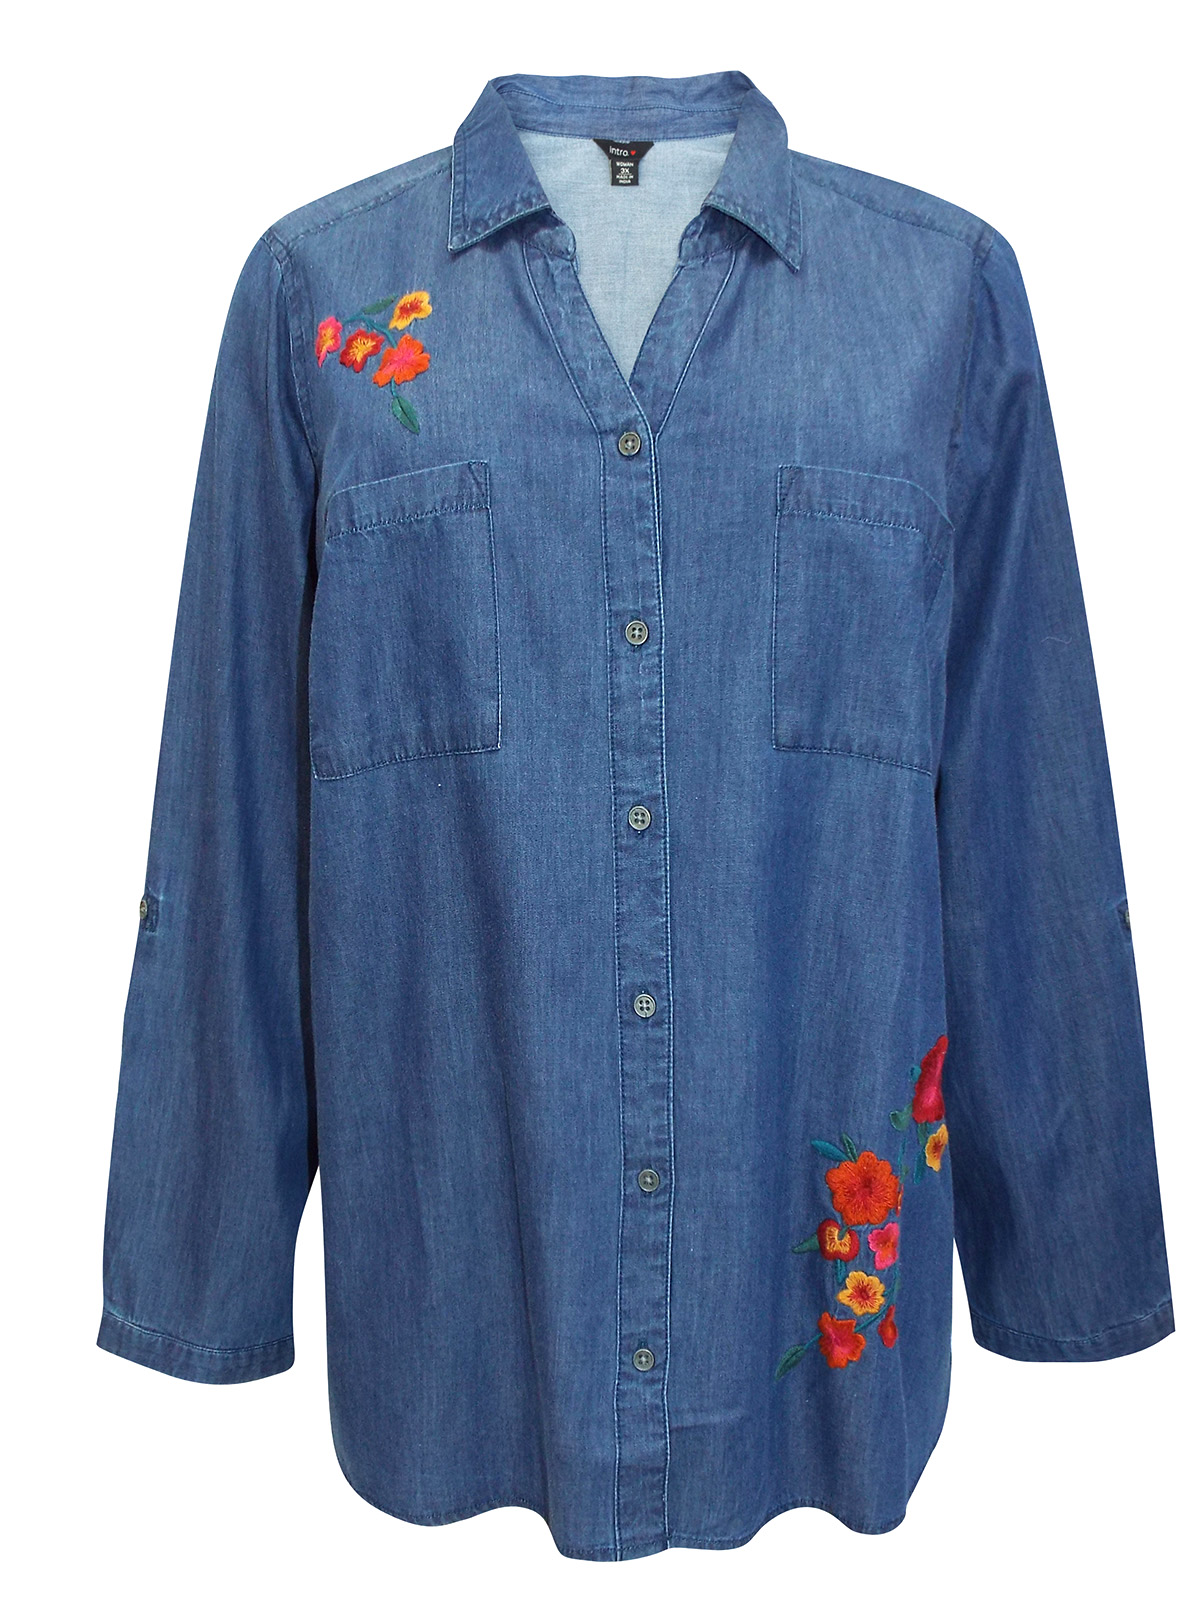 Intro - - Intro BLUE-DENIM Floral Embroidered Dipped Hem Denim Shirt ...